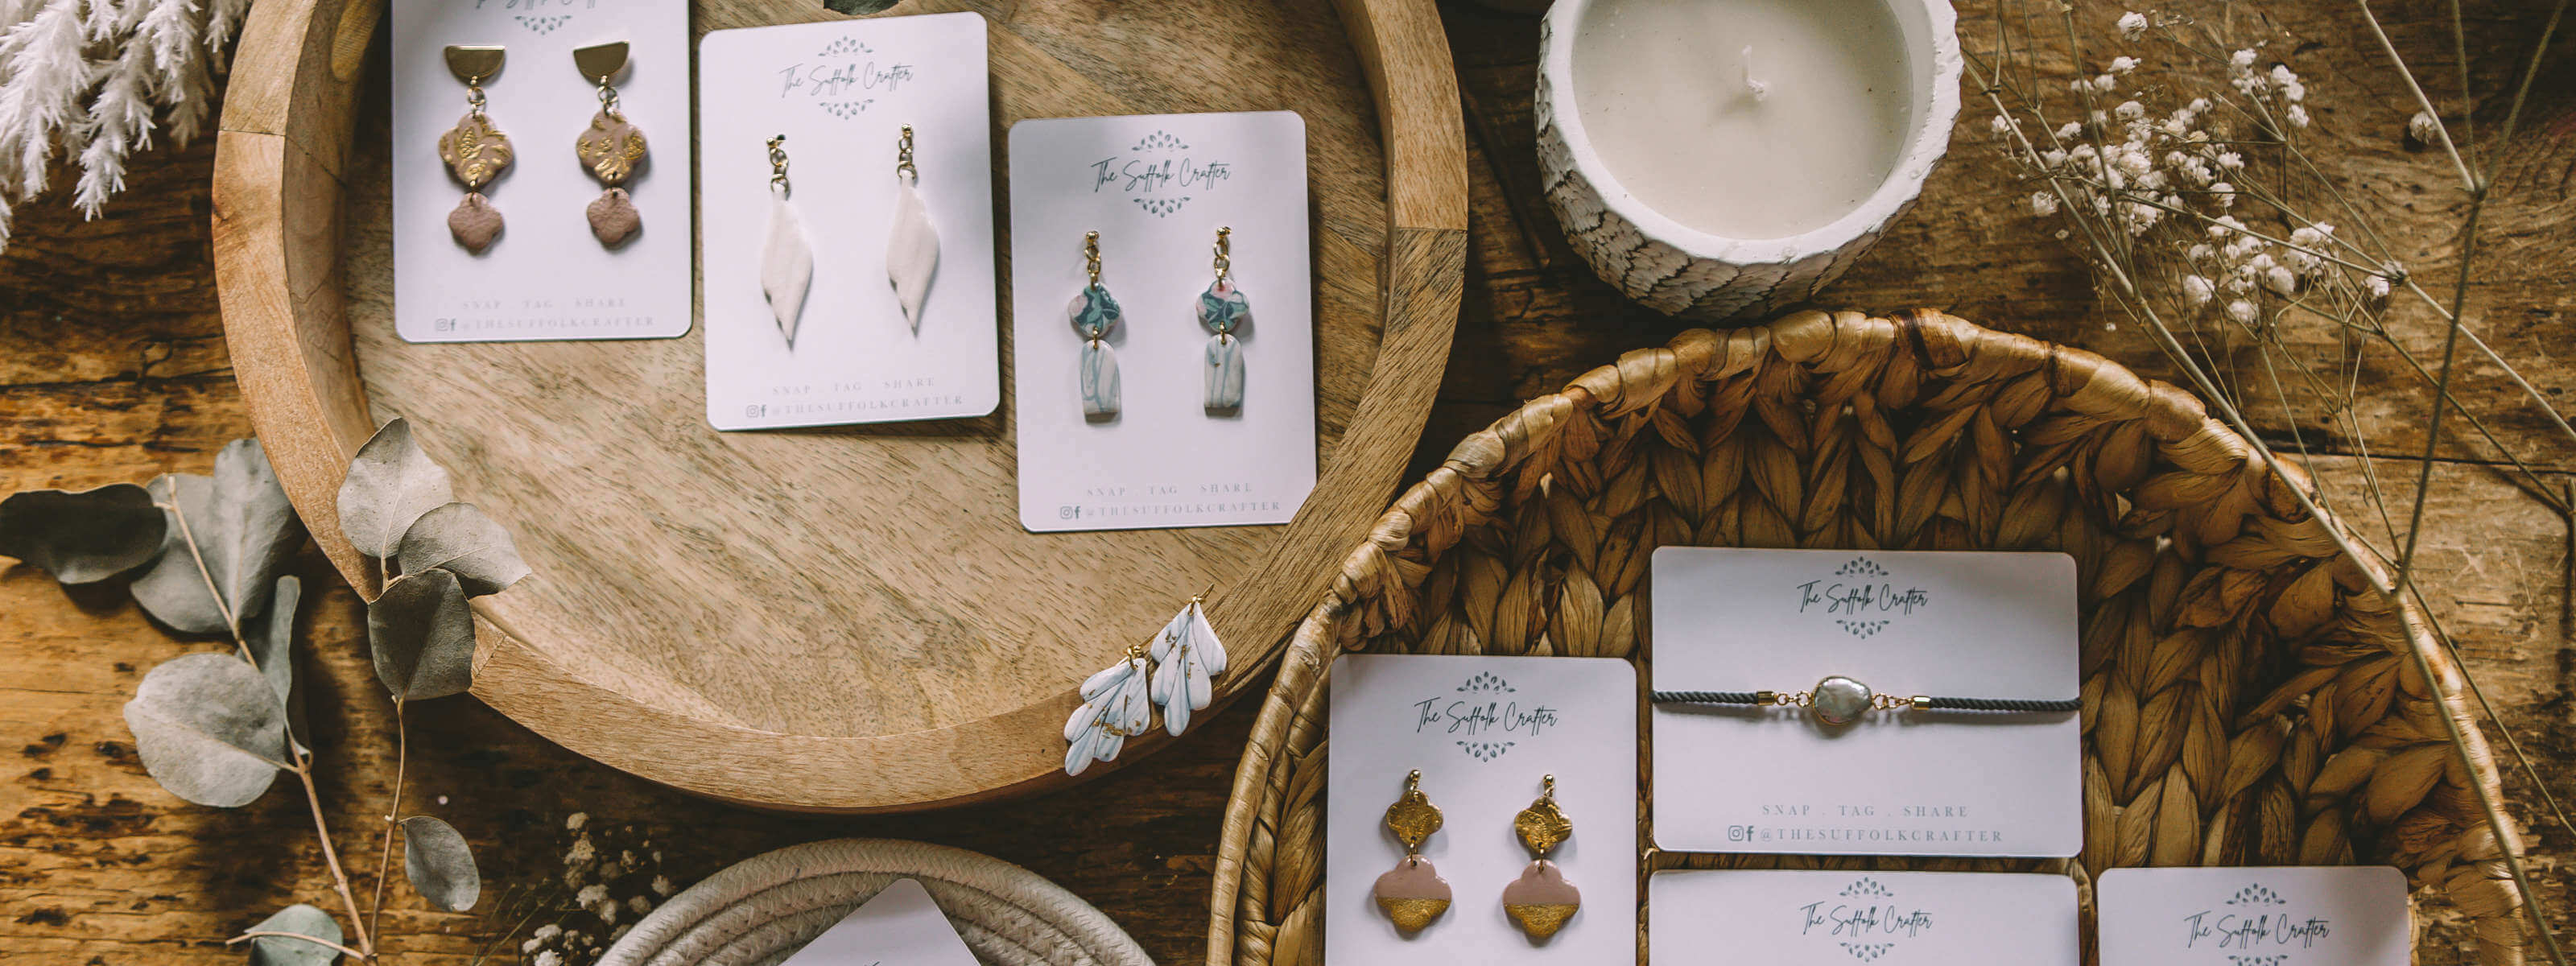 handmade jewellery for women - The Suffolk Crafter